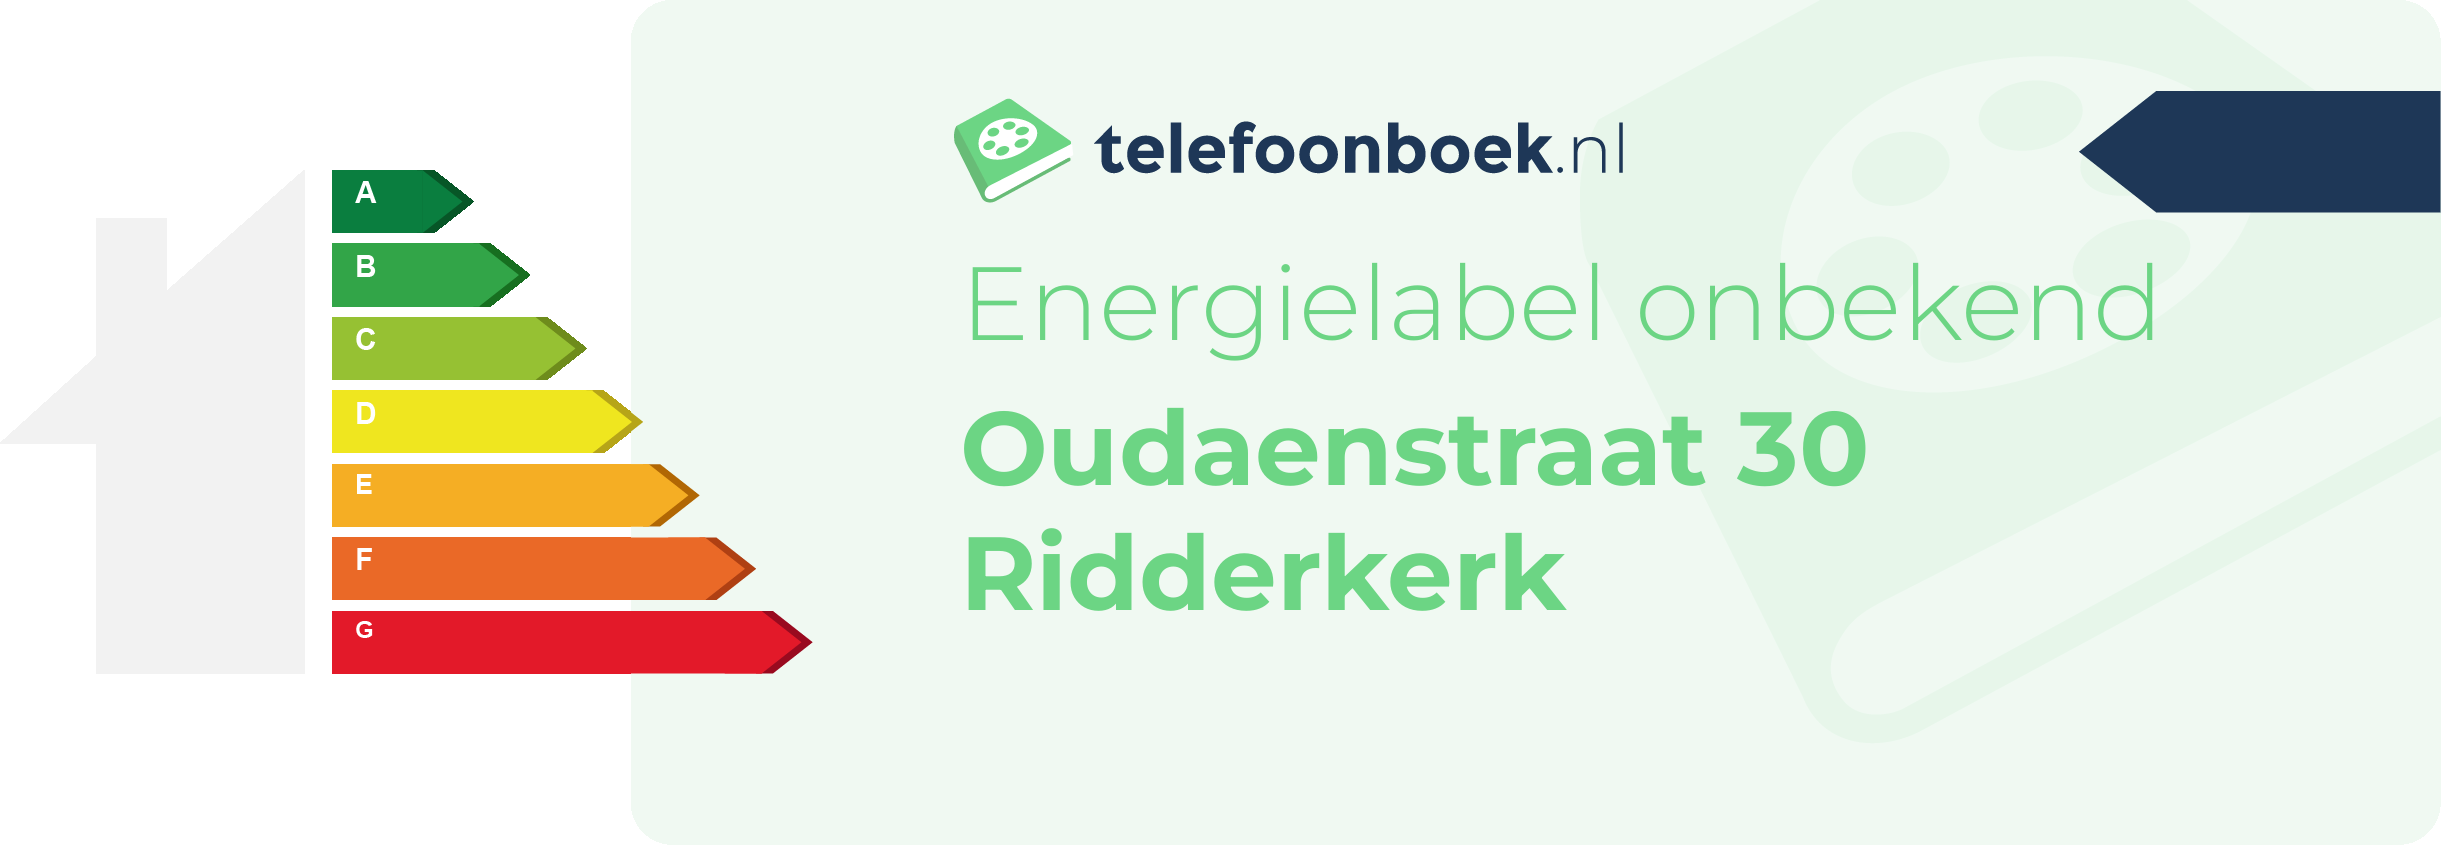 Energielabel Oudaenstraat 30 Ridderkerk